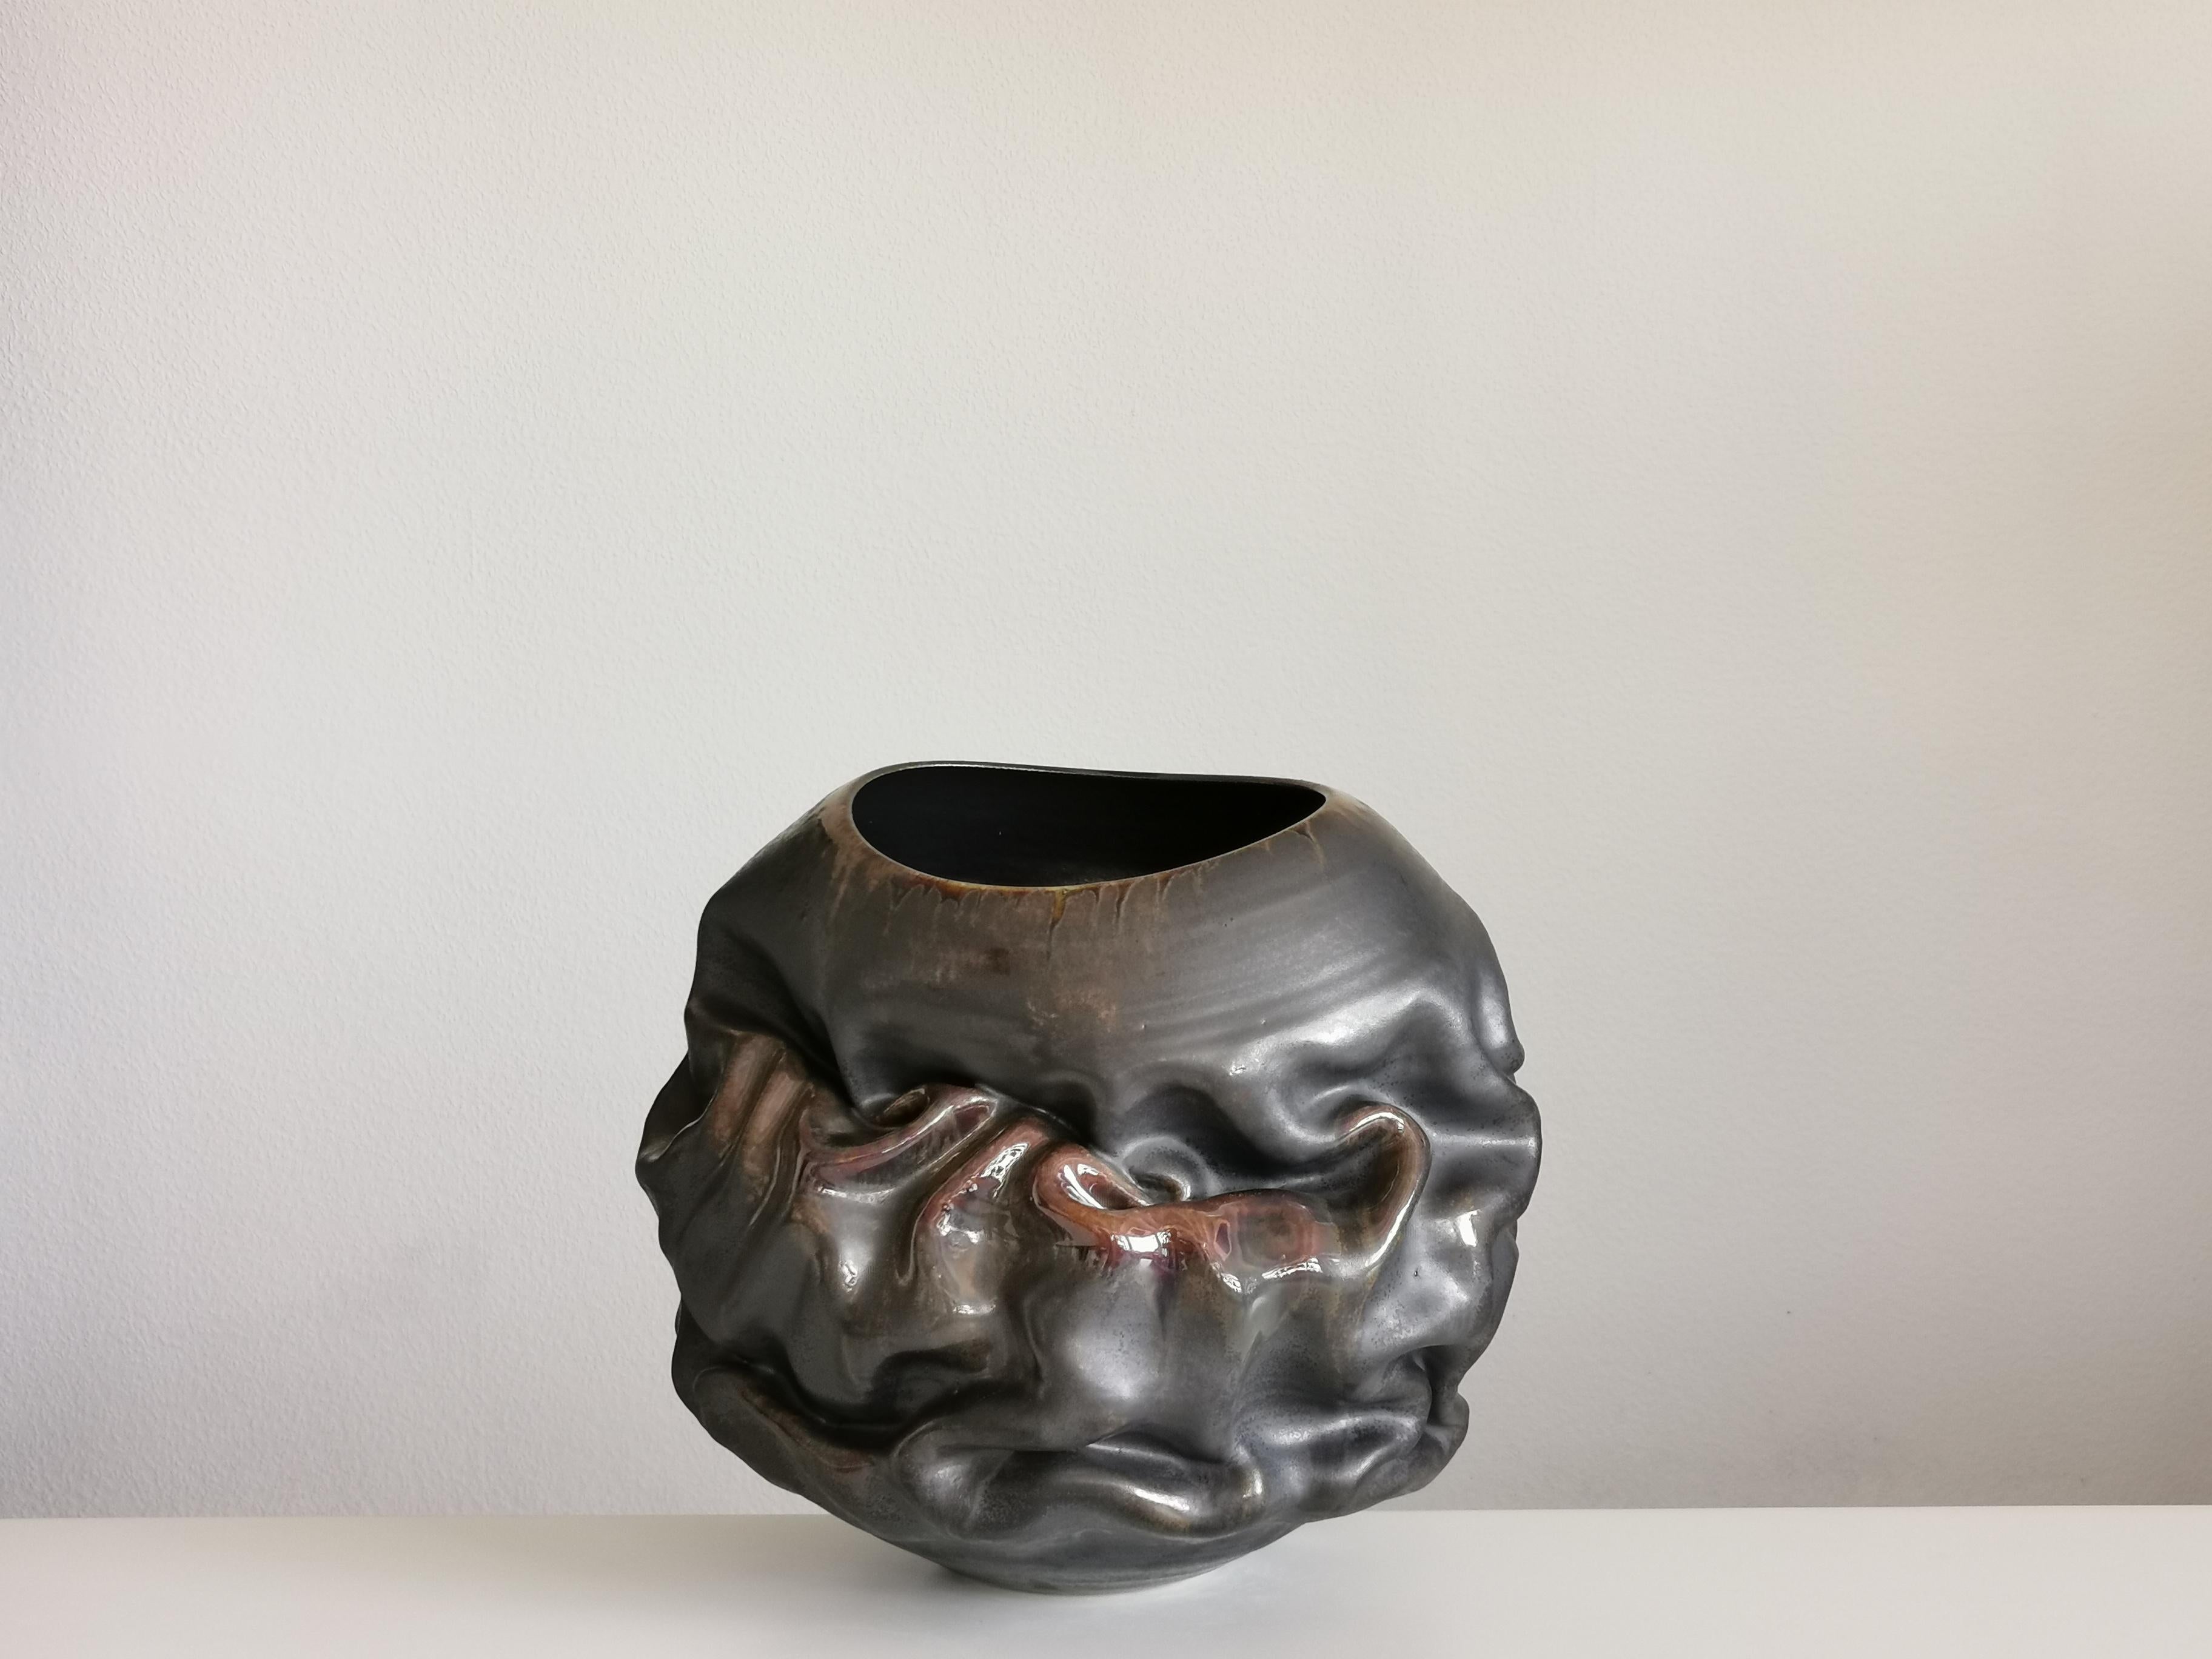 Black Metallic Oval Dehydrated Form, Vase, Interior Sculpture or Vessel, Objet D For Sale 5